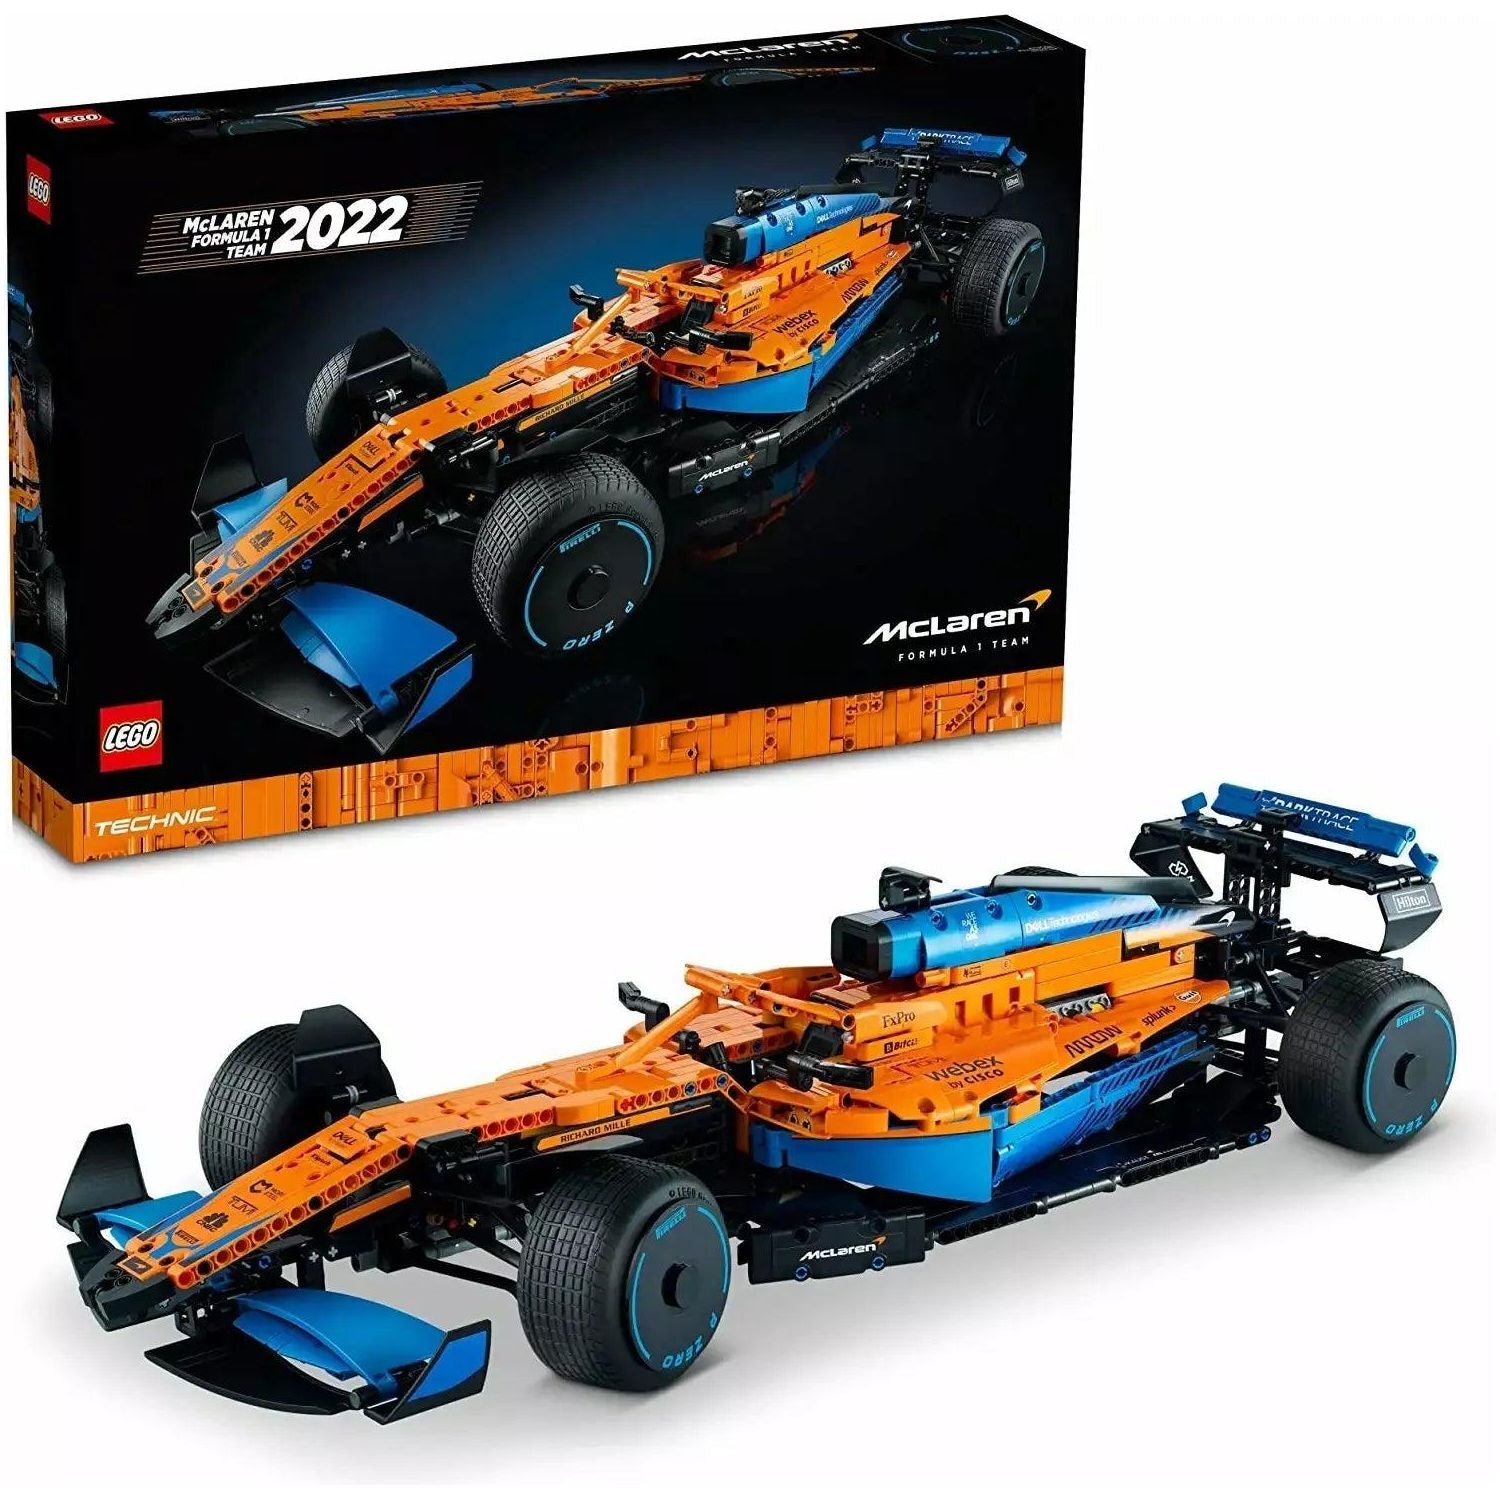 LEGO 42141 Technic McLaren Formula 1 Race Car Build a Replica Model of The 2022 McLaren Formula 1 Race Car (1,432 Pieces) - BumbleToys - 18+, 5-7 Years, Boys, Clearance, LEGO, OXE, Pre-Order, Technic